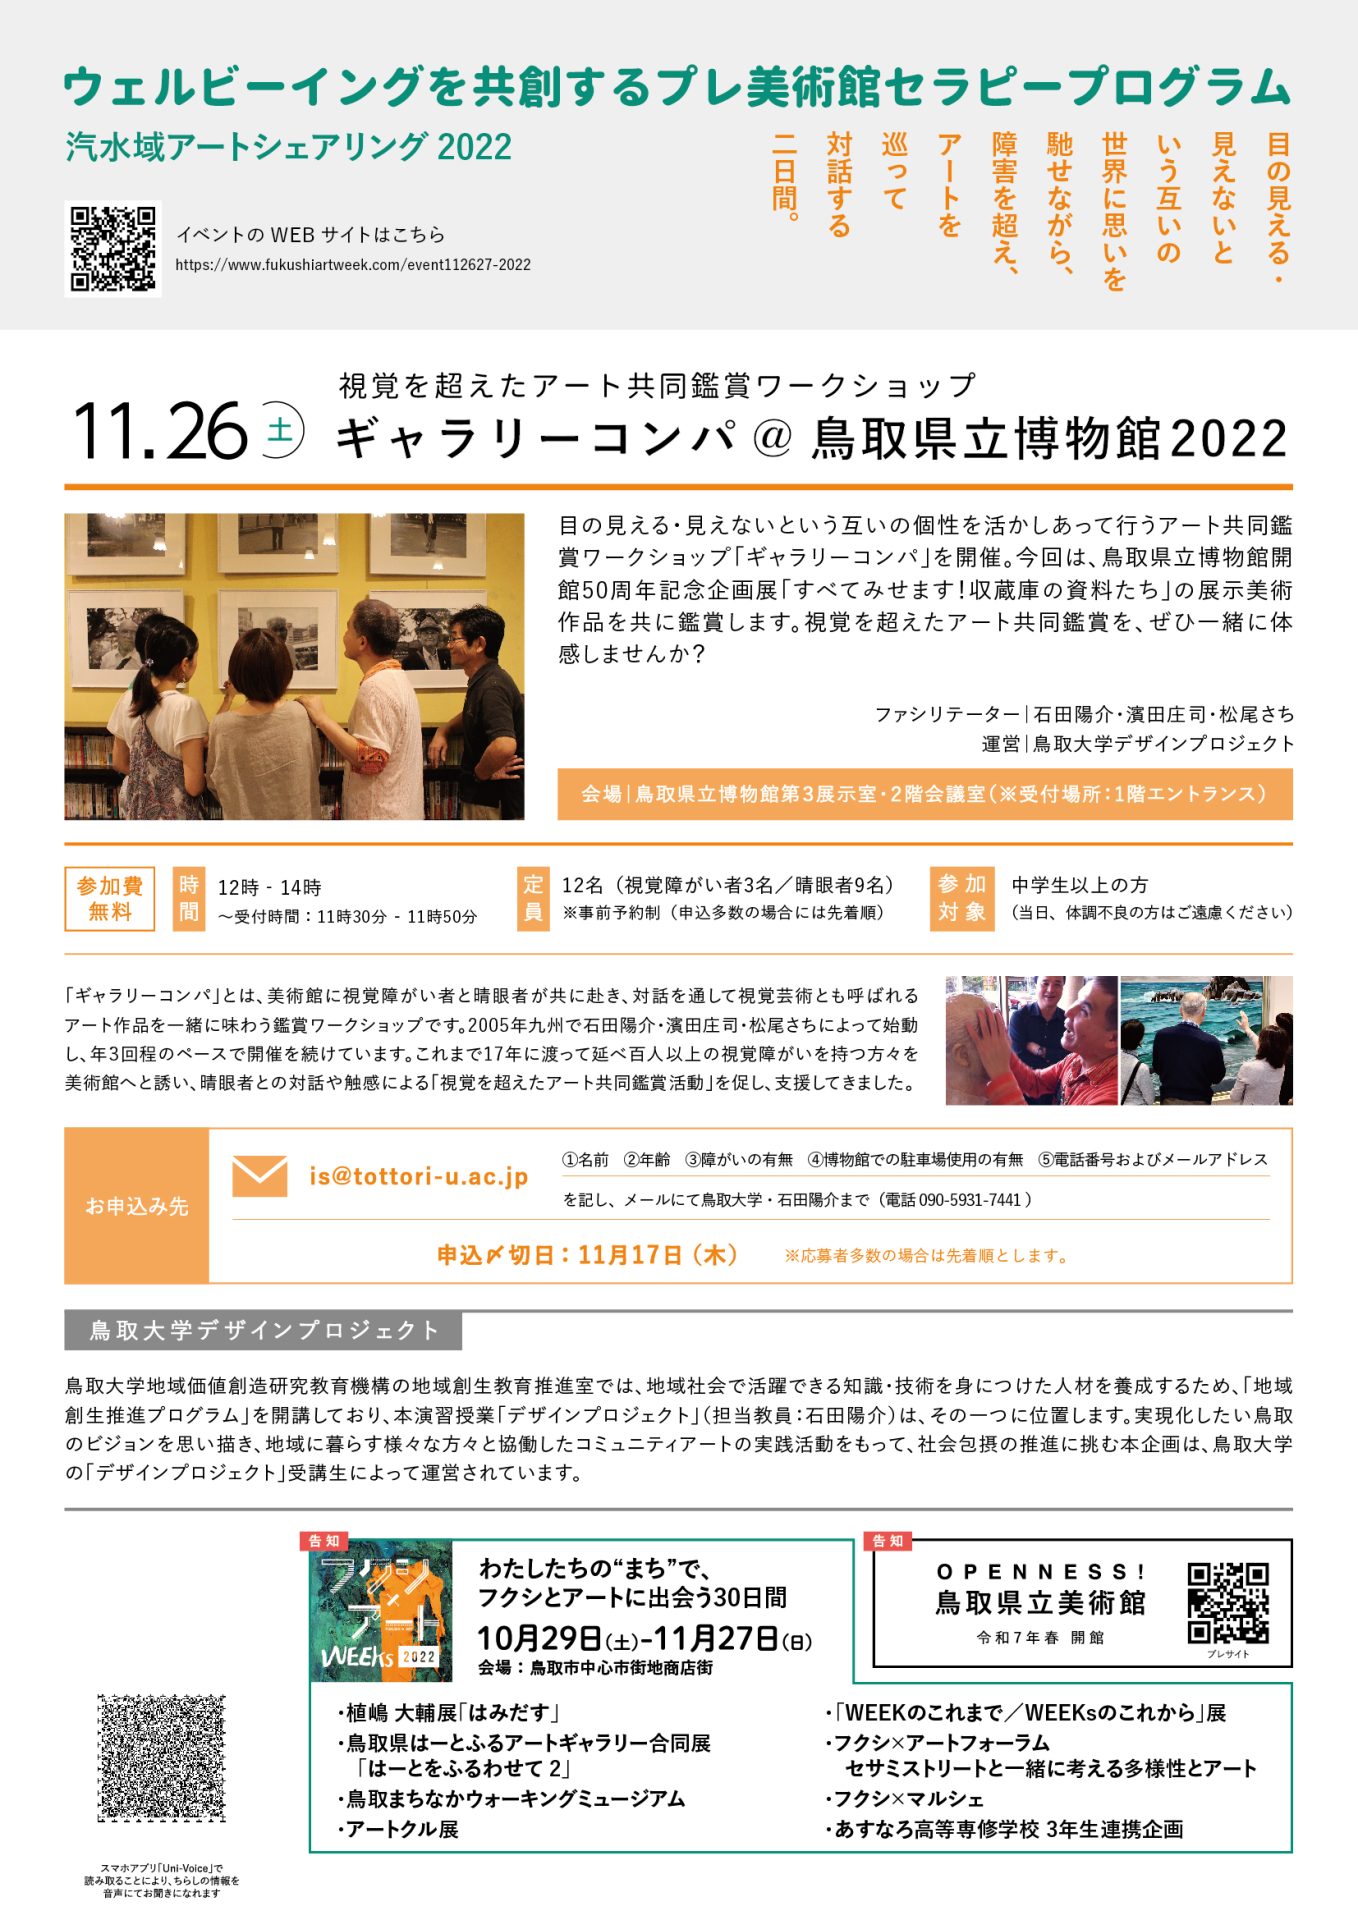 kisui_A3_2 【イベント】11/26,27 ウェルビーイングを共創するプレ美術館セラピープログラム 「汽水域アートシェアリング2022」開催